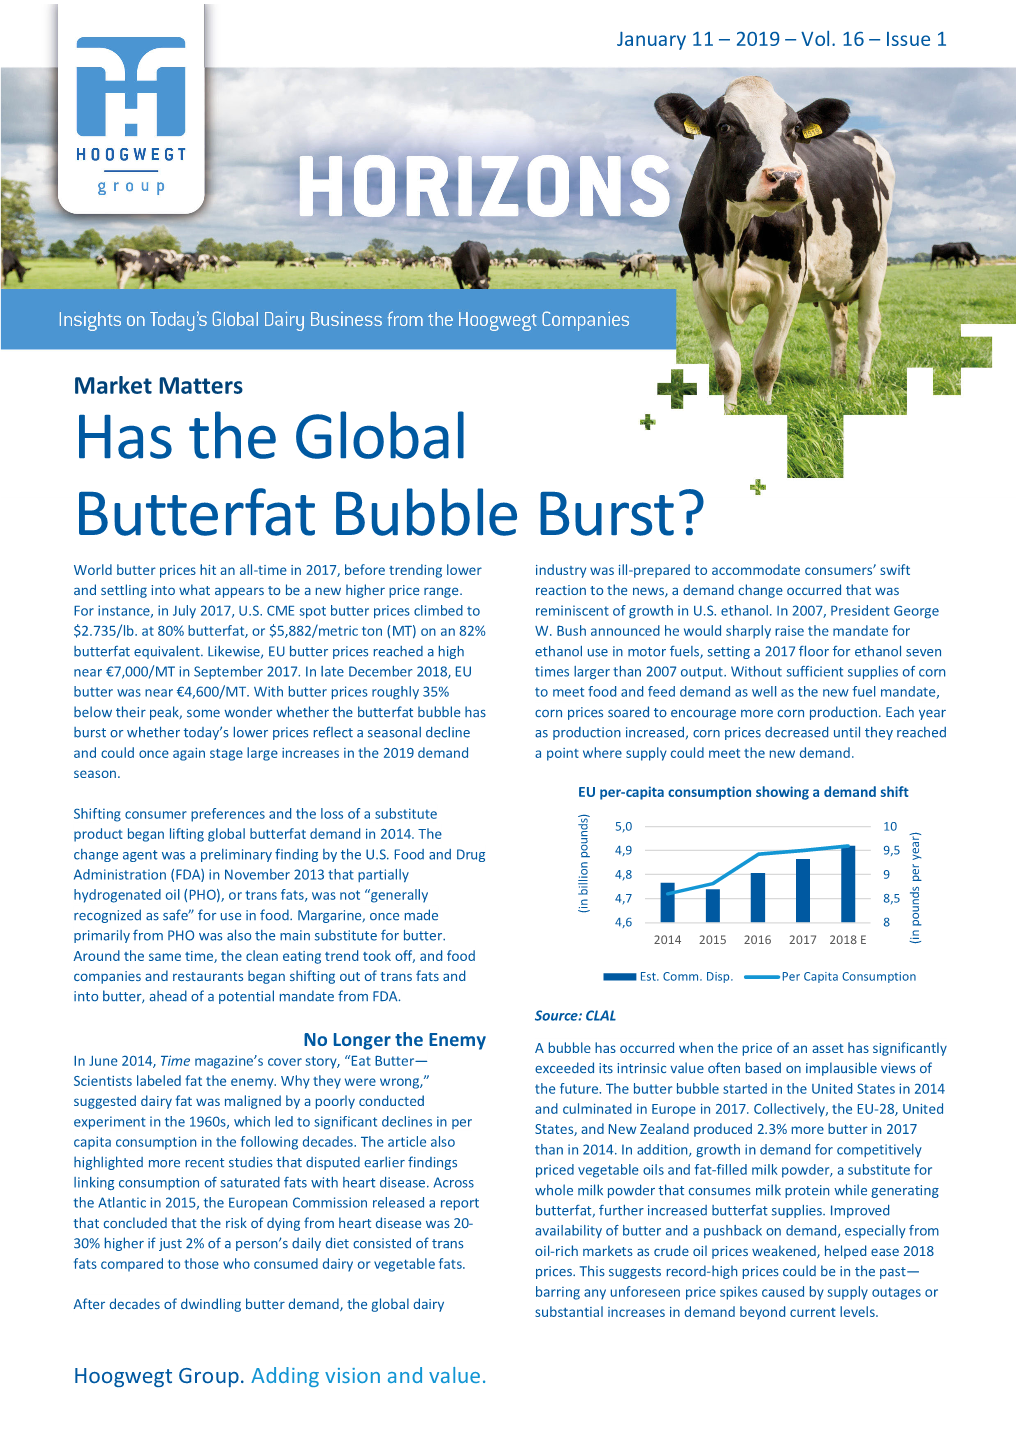 Has the Global Butterfat Bubble Burst?